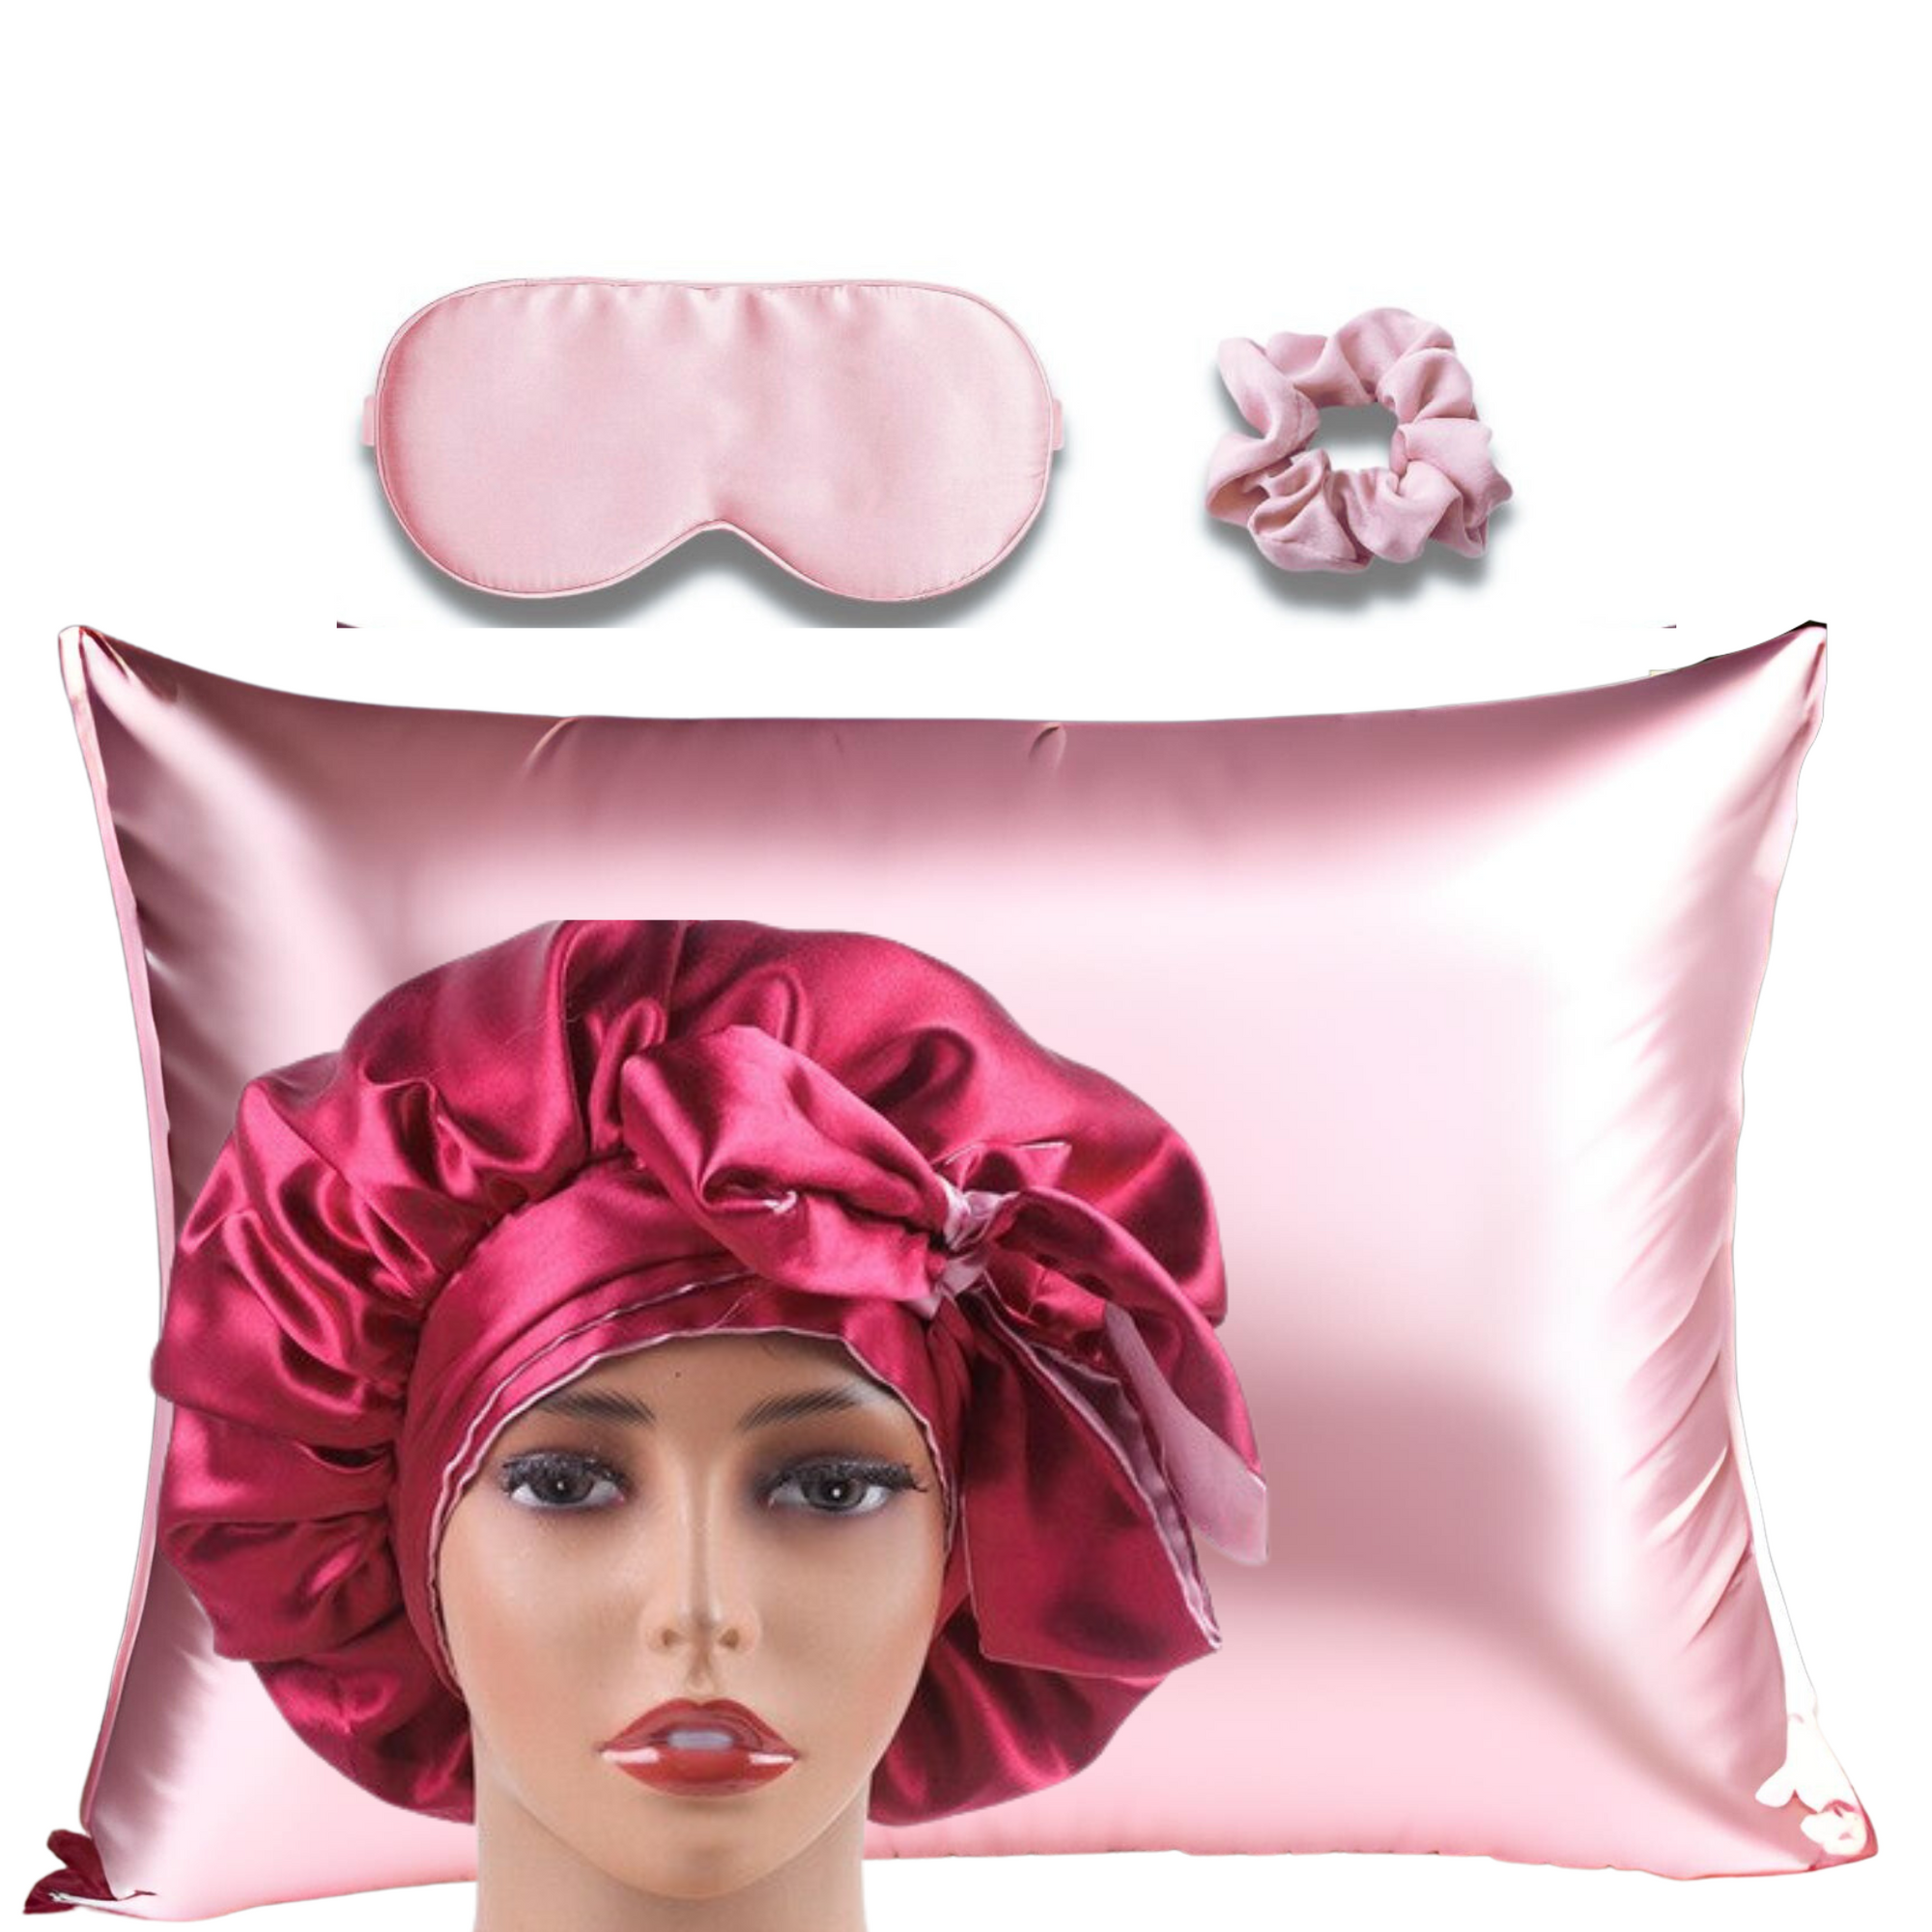 pink satin bonnet & pillowcase set with tie